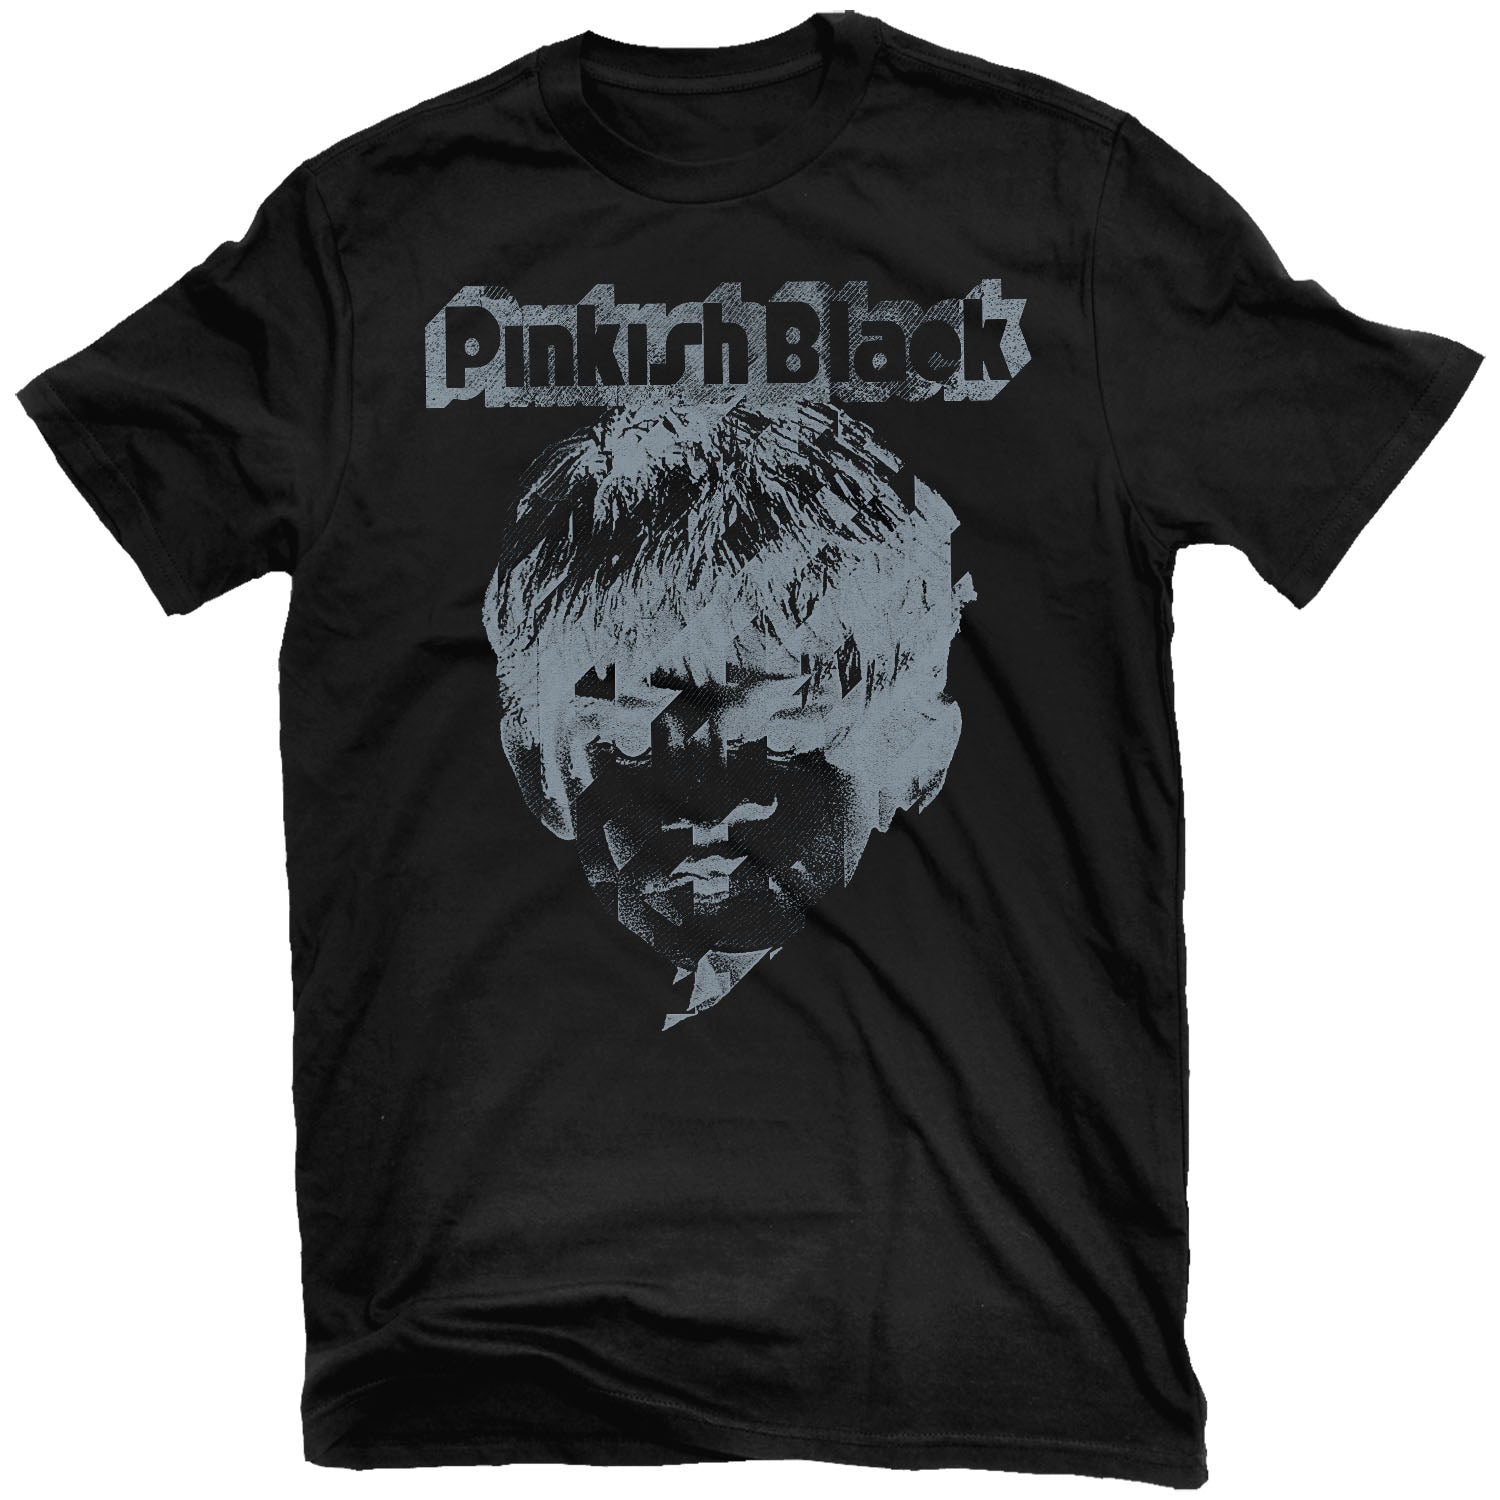 Pinkish Black "Concept Unification" T-Shirt